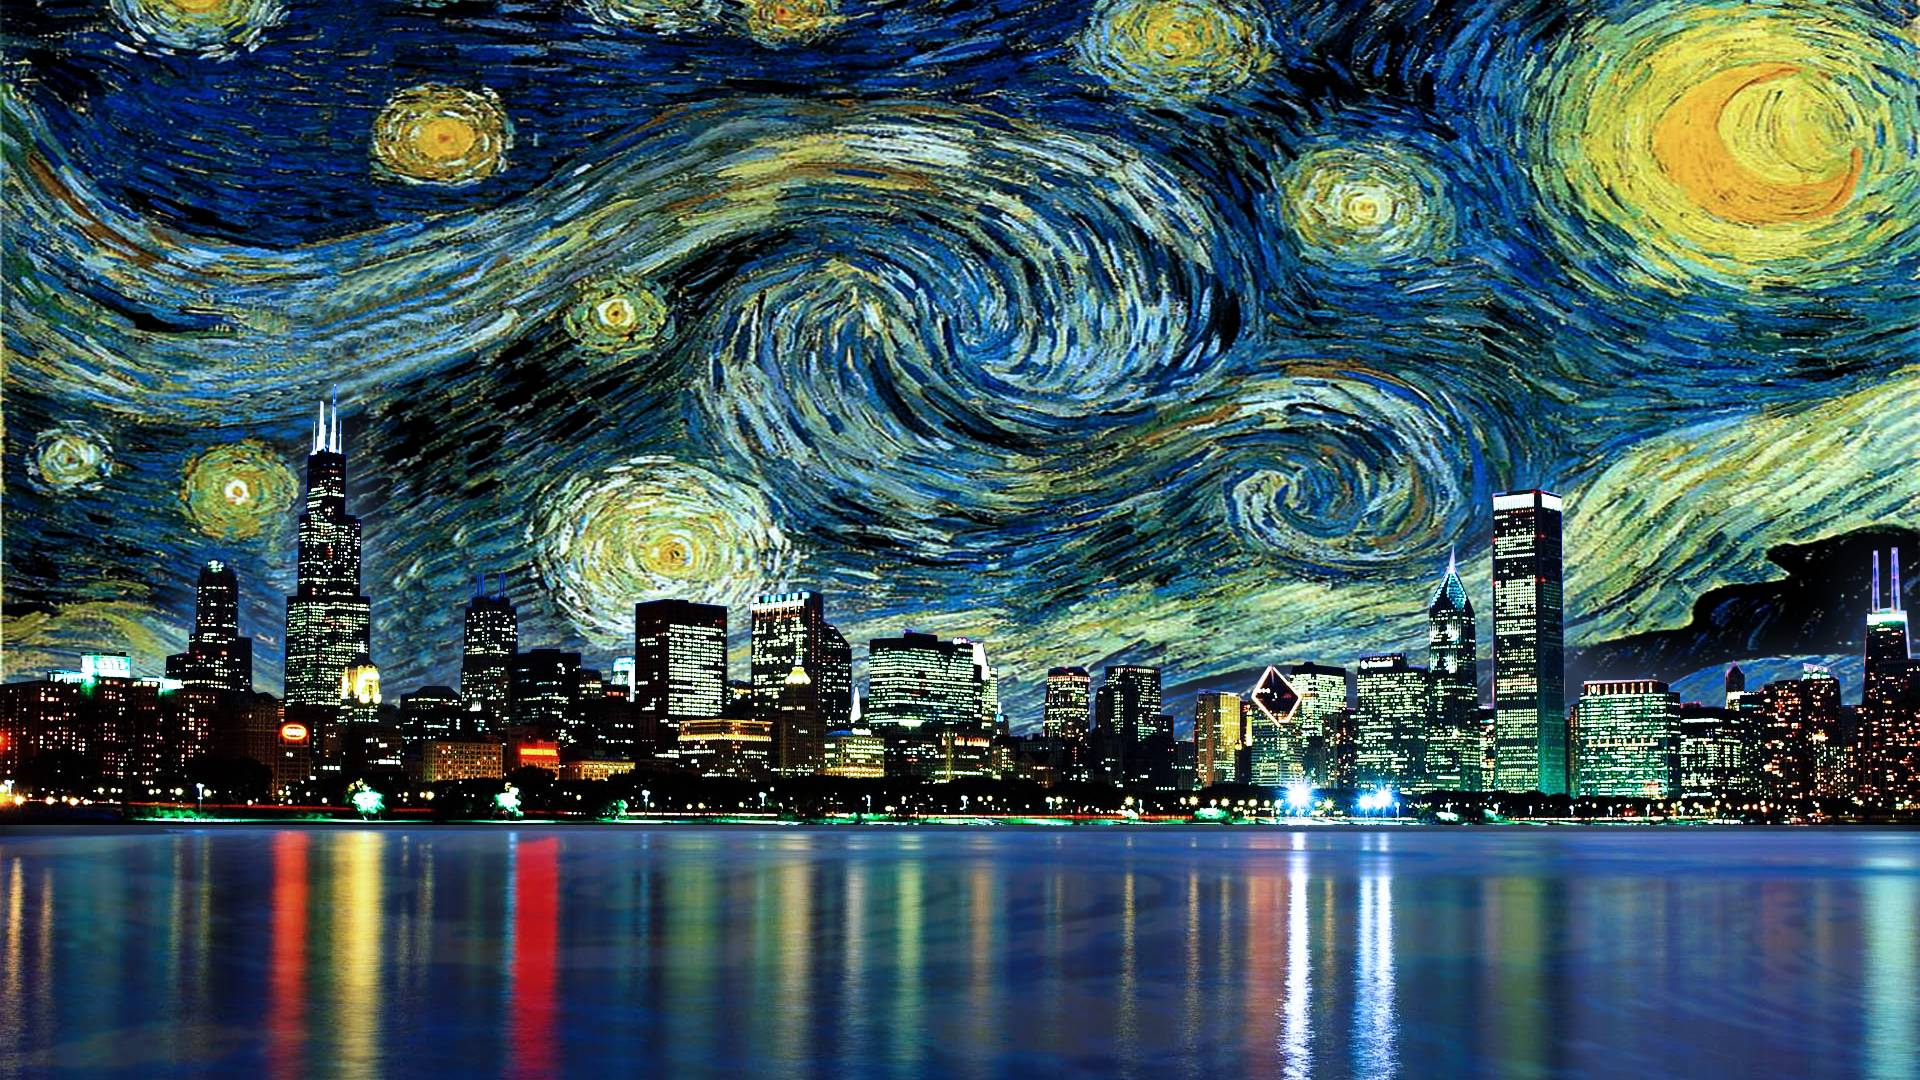 Starry Night Desktop Backgrounds Wallpaper Cave